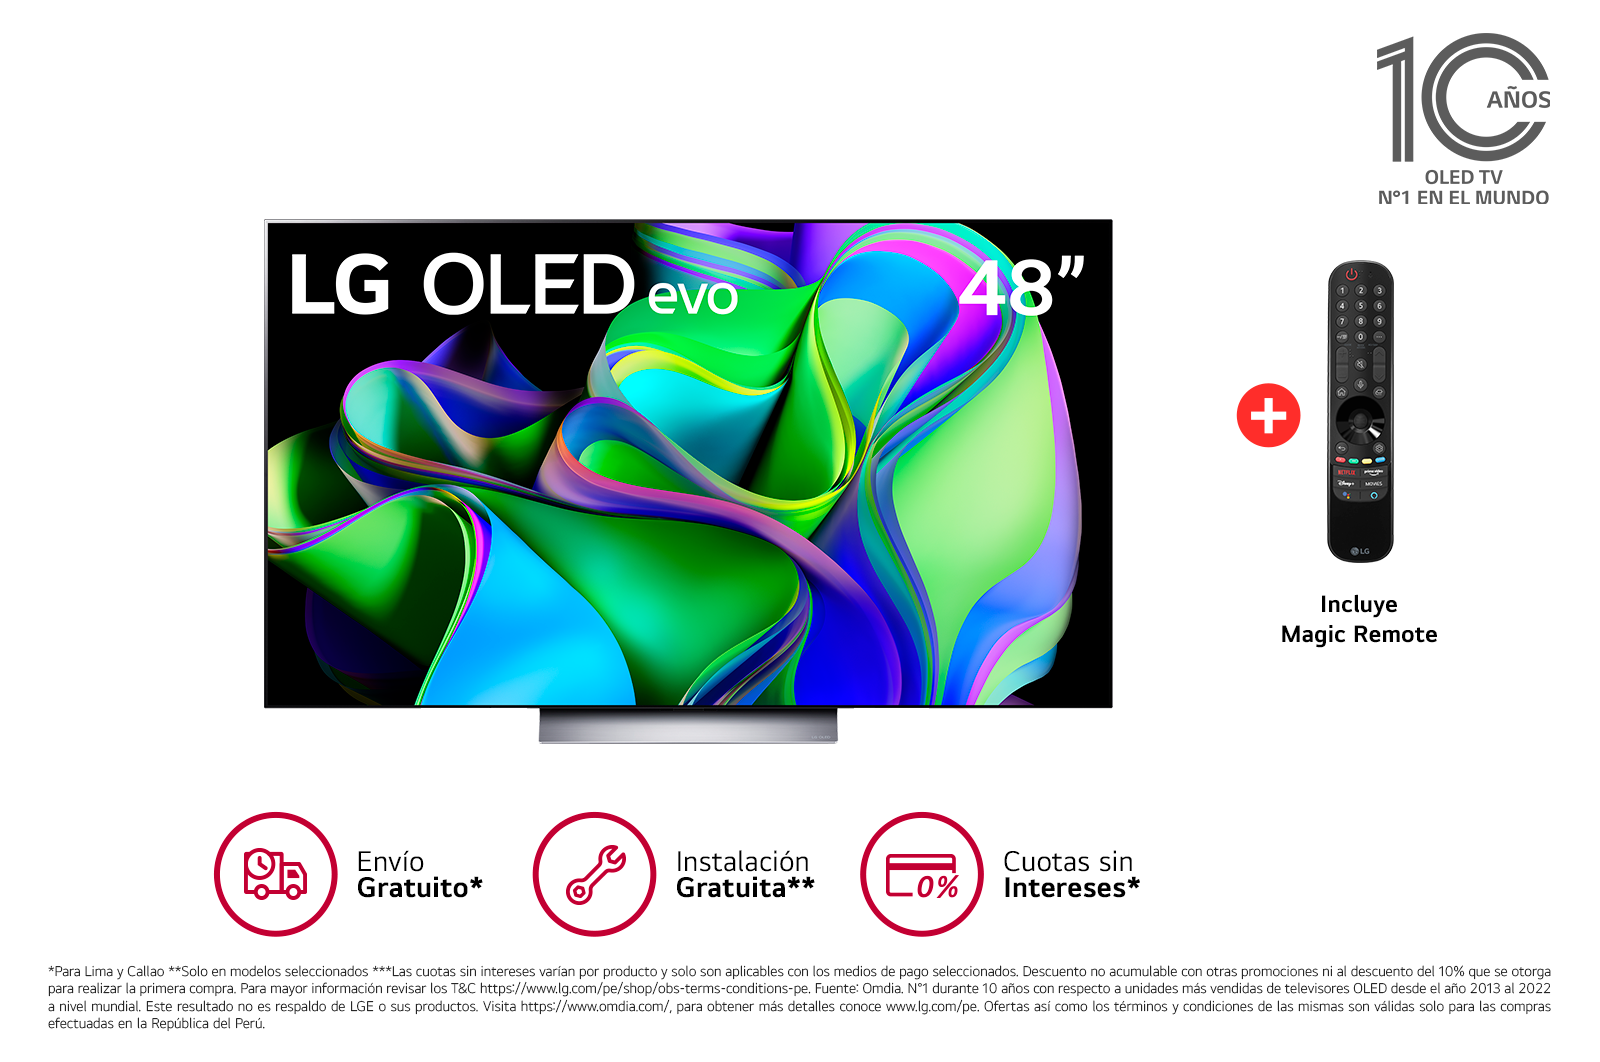 LG LG OLED 55'' C1 4K Smart TV con ThinQ AI(Inteligencia